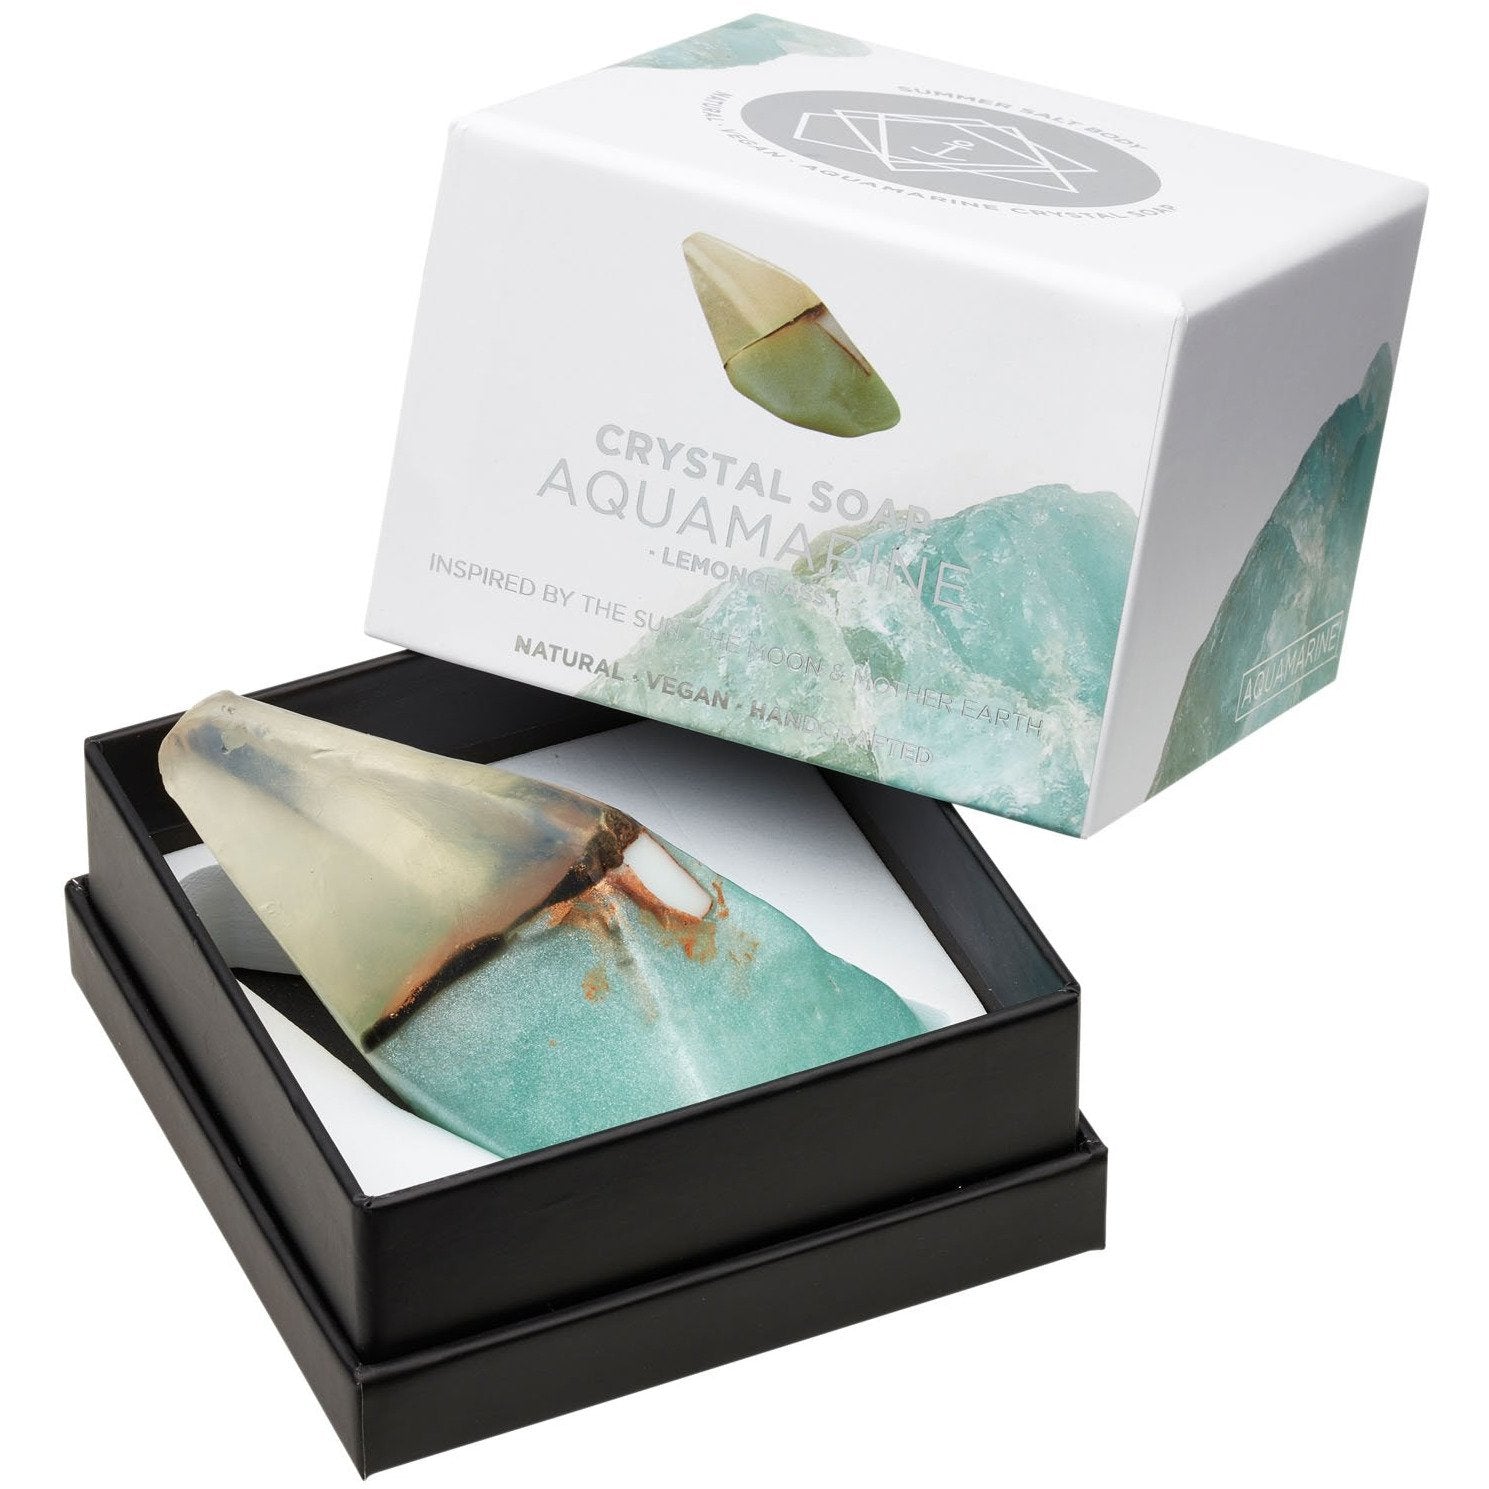 Aquamarine Crystal Soap